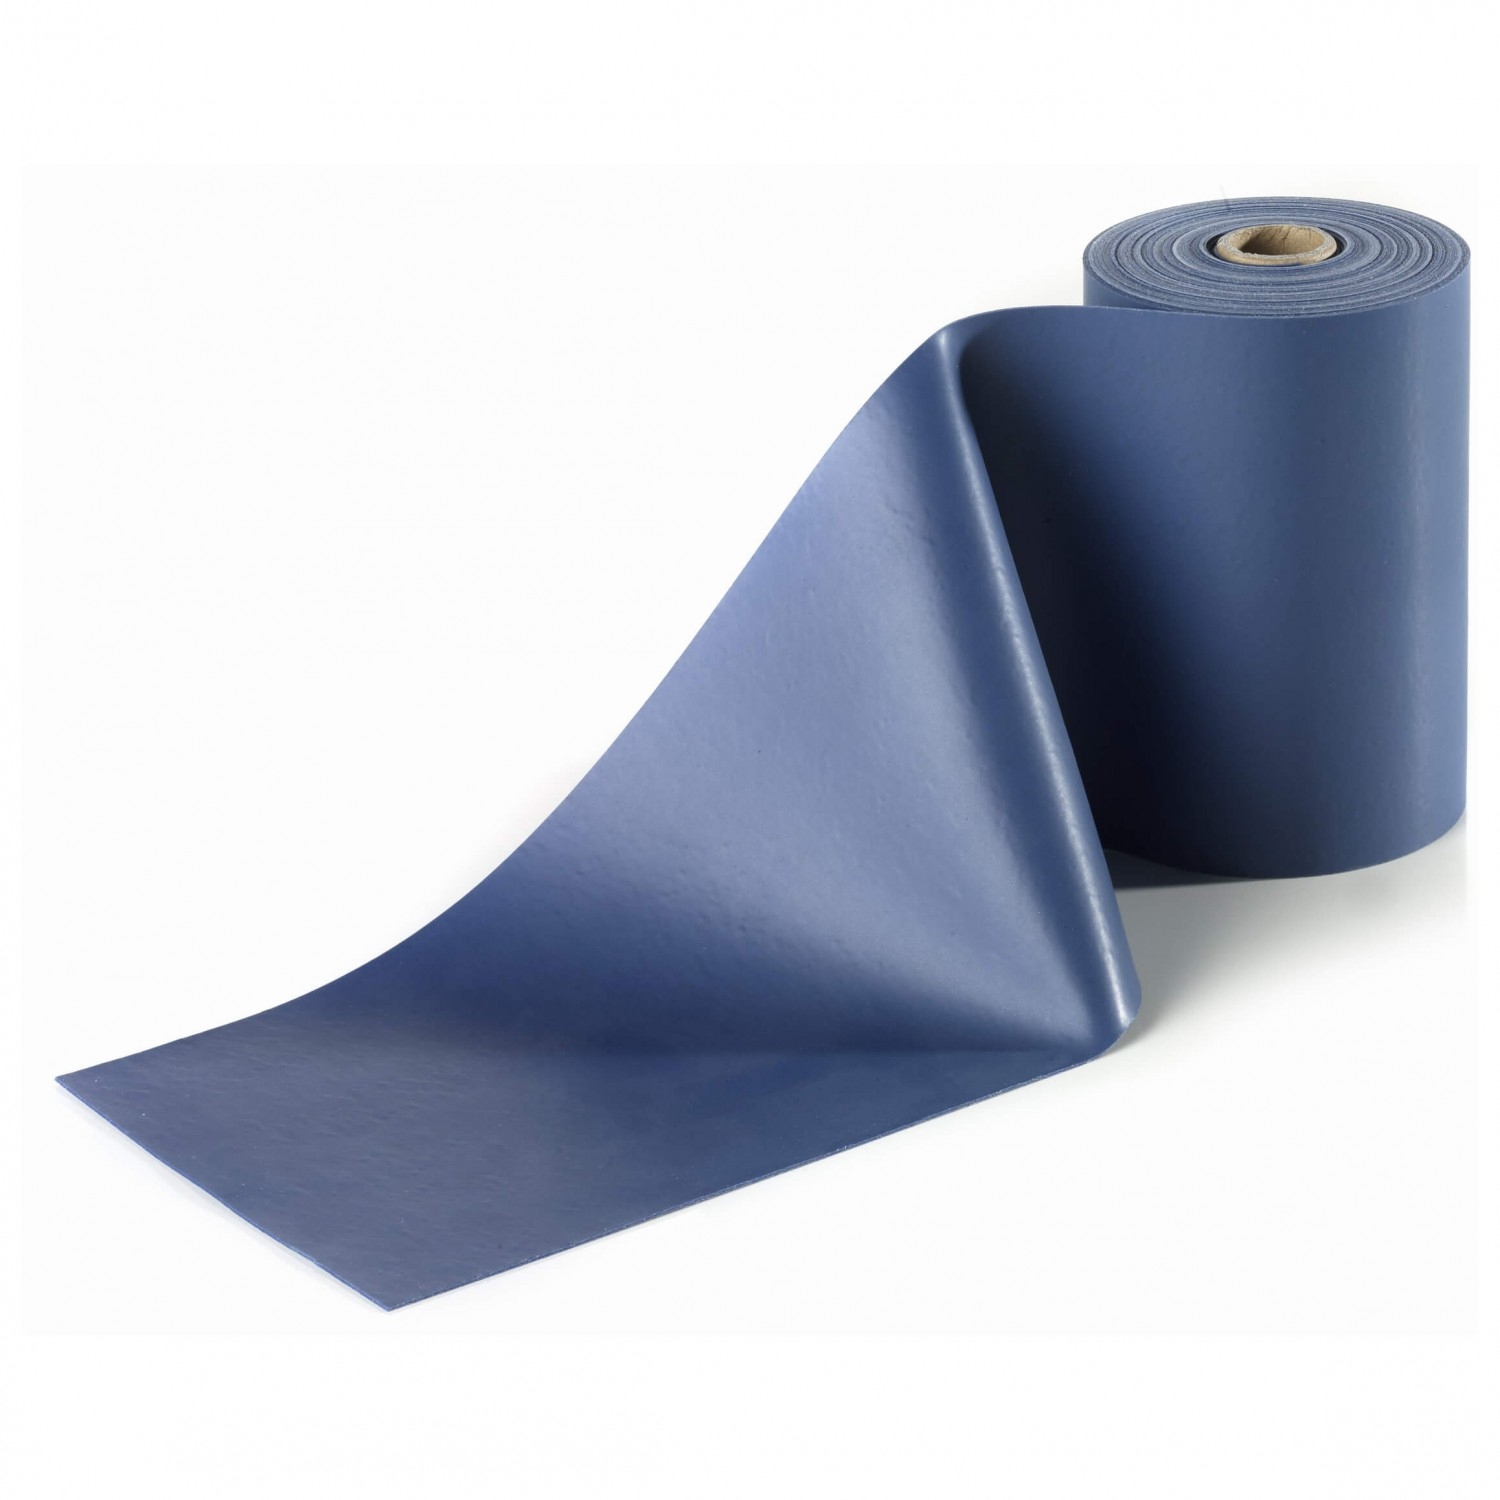 Artzt Vitality oefenband latexvrij - 6 m - extra sterk - blauw